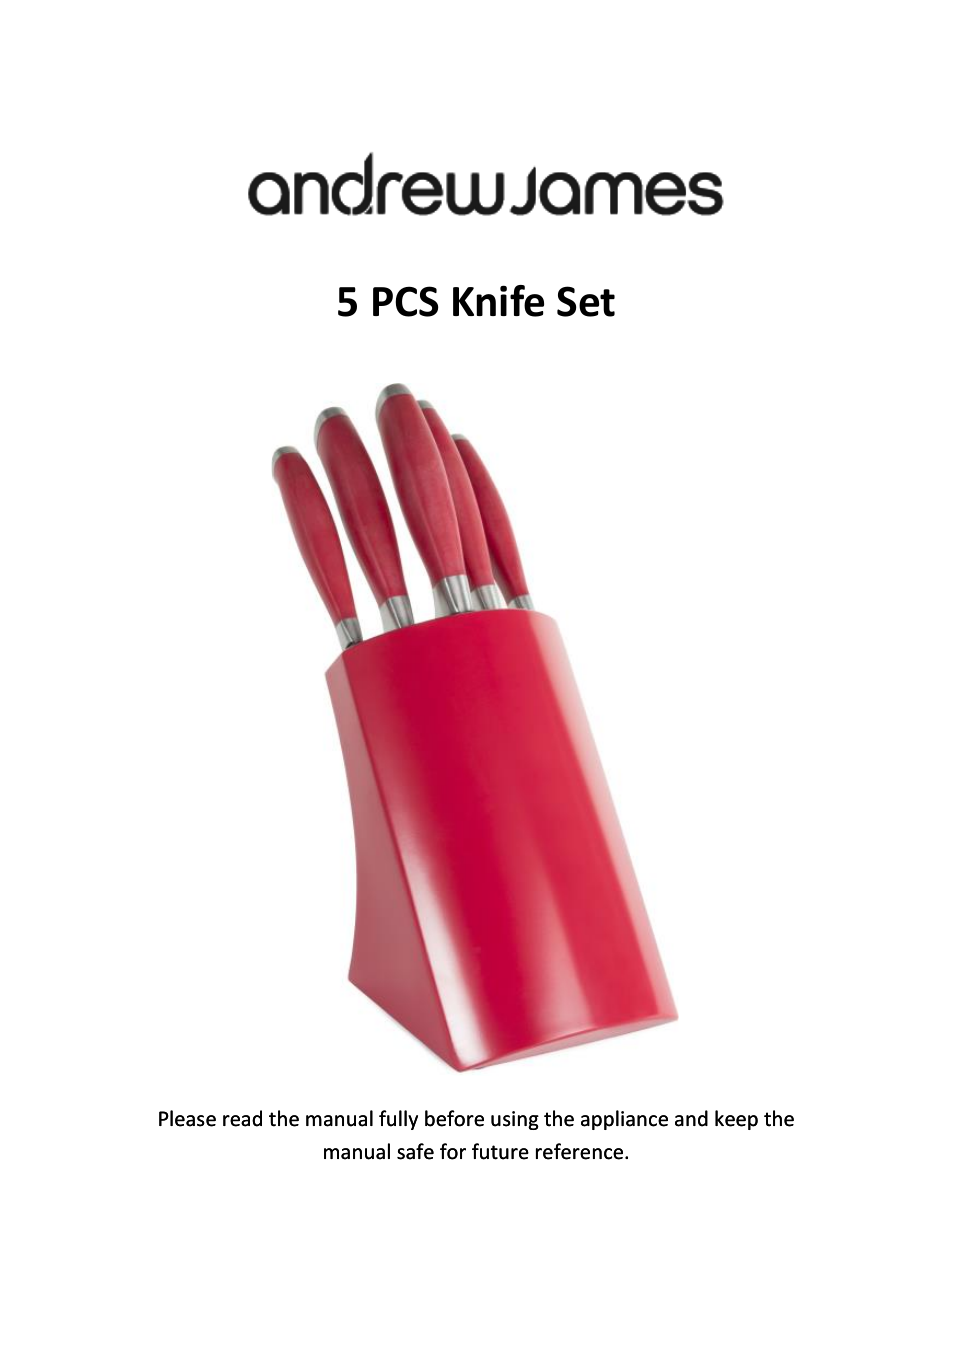 AJ000347 Premium Five Piece Stainless Steel Knife Set